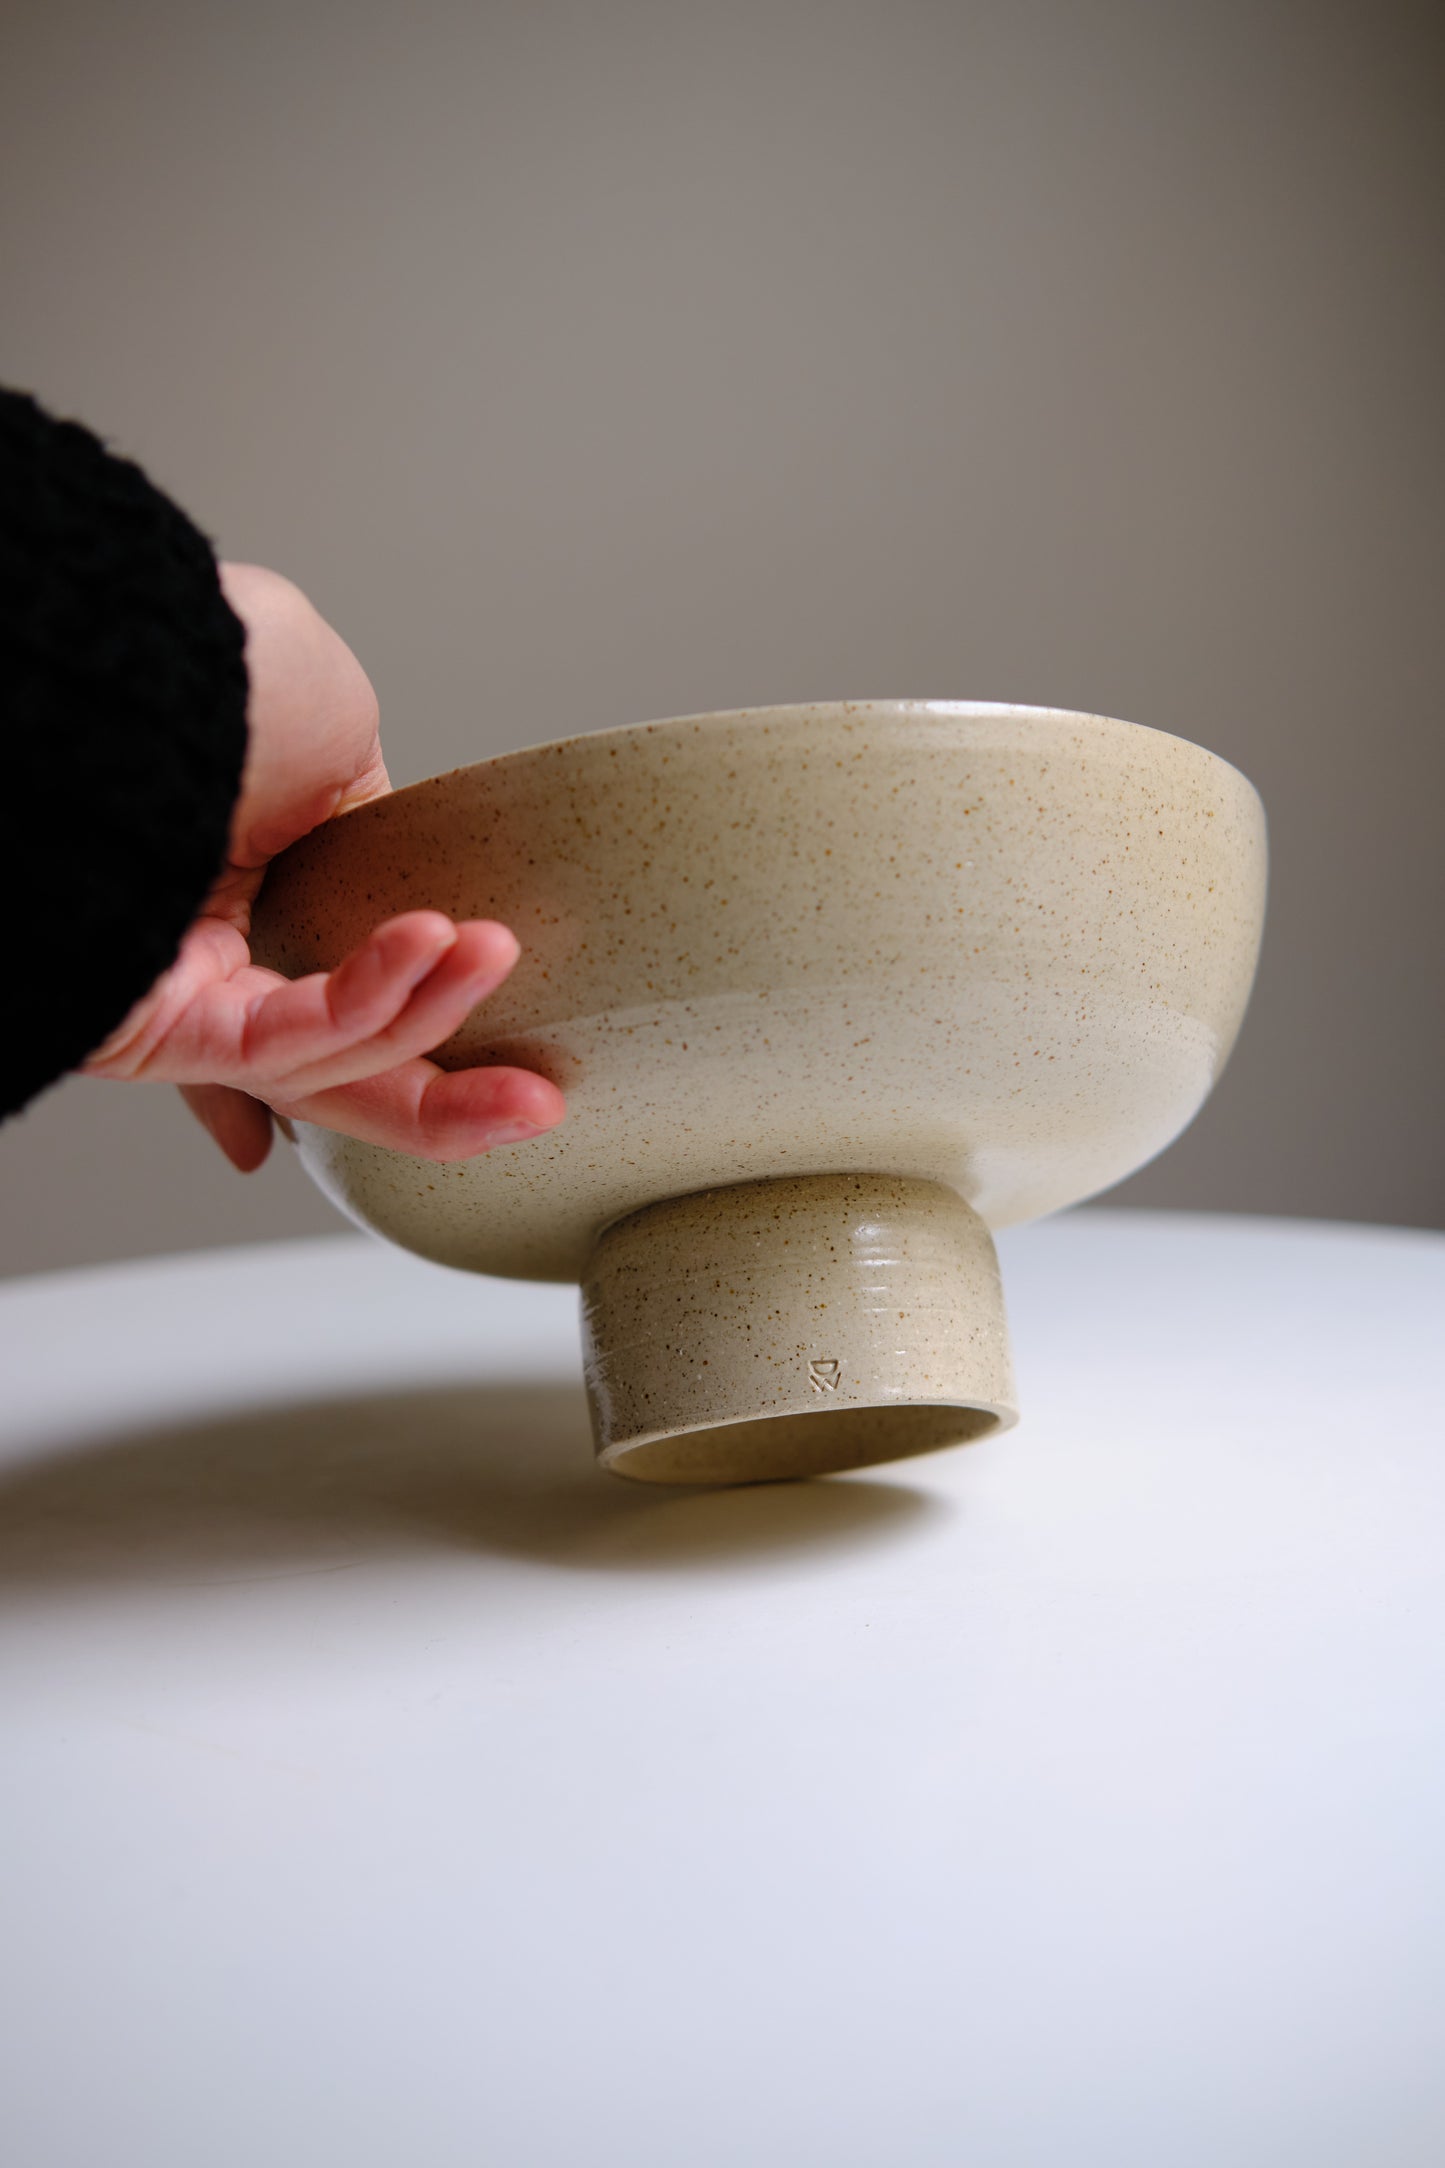 Pedestal bowl no. 30